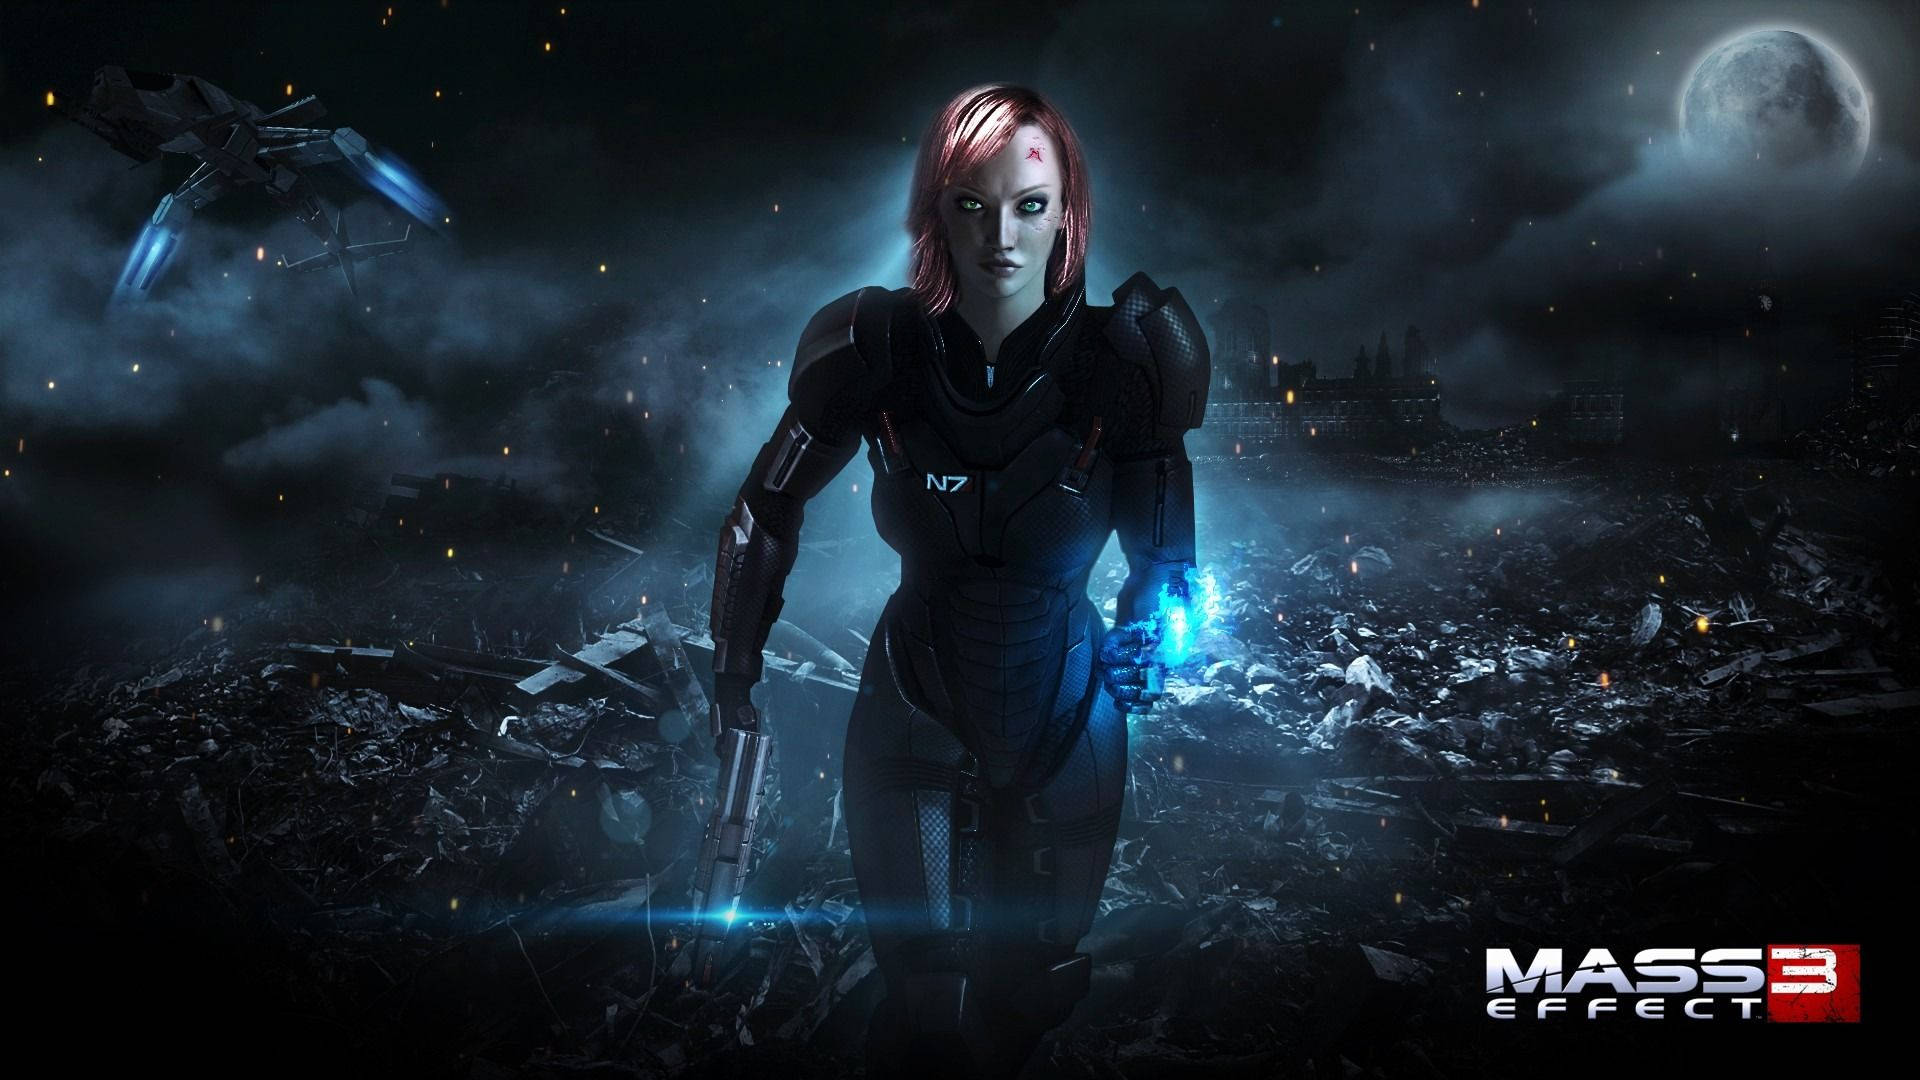 Commandershepard Frauen Mass Effect 3 Wallpaper